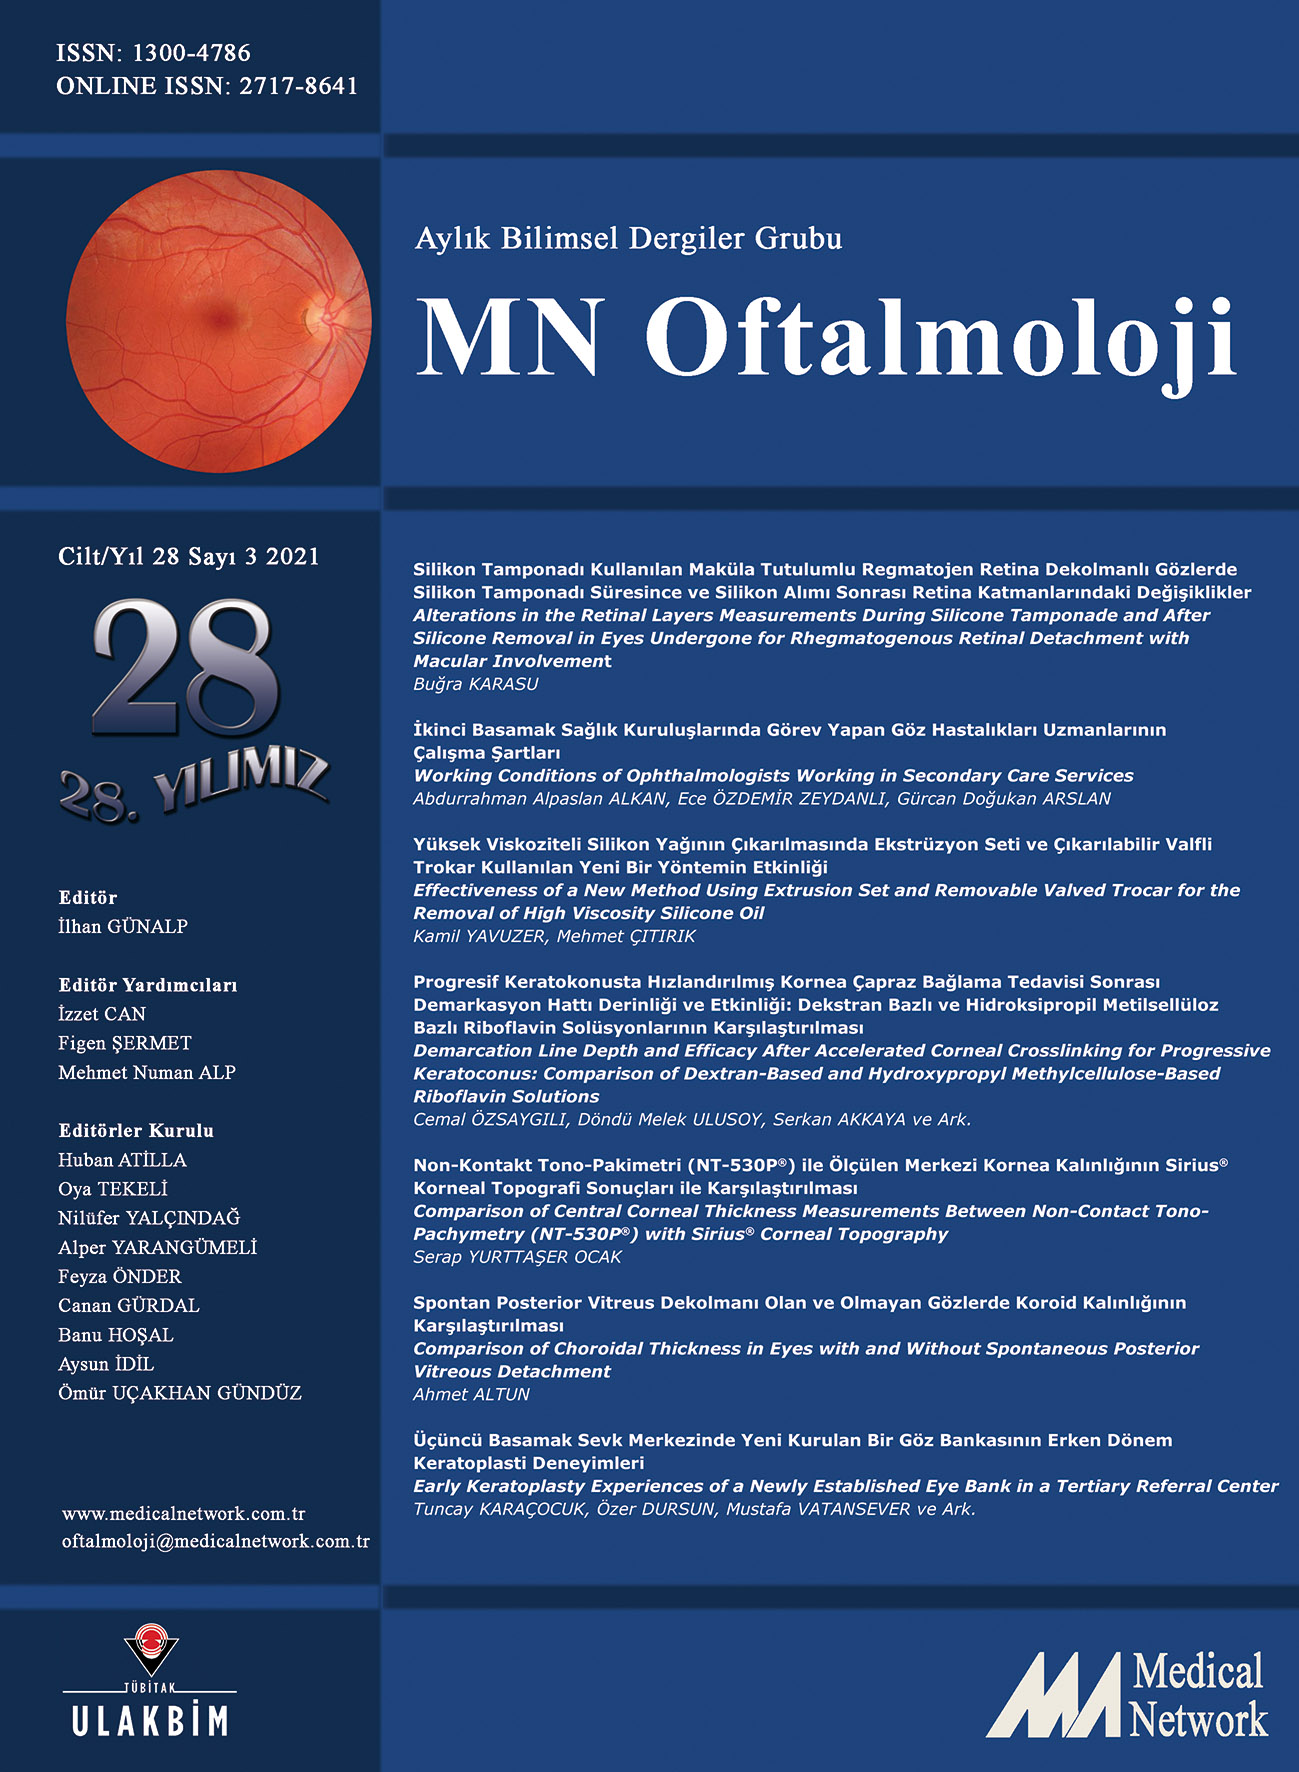 <p>MN Oftalmoloji Cilt: 28 Say: 3 2021 (MN Ophthalmology Volume: 28 No: 3 2021)</p>